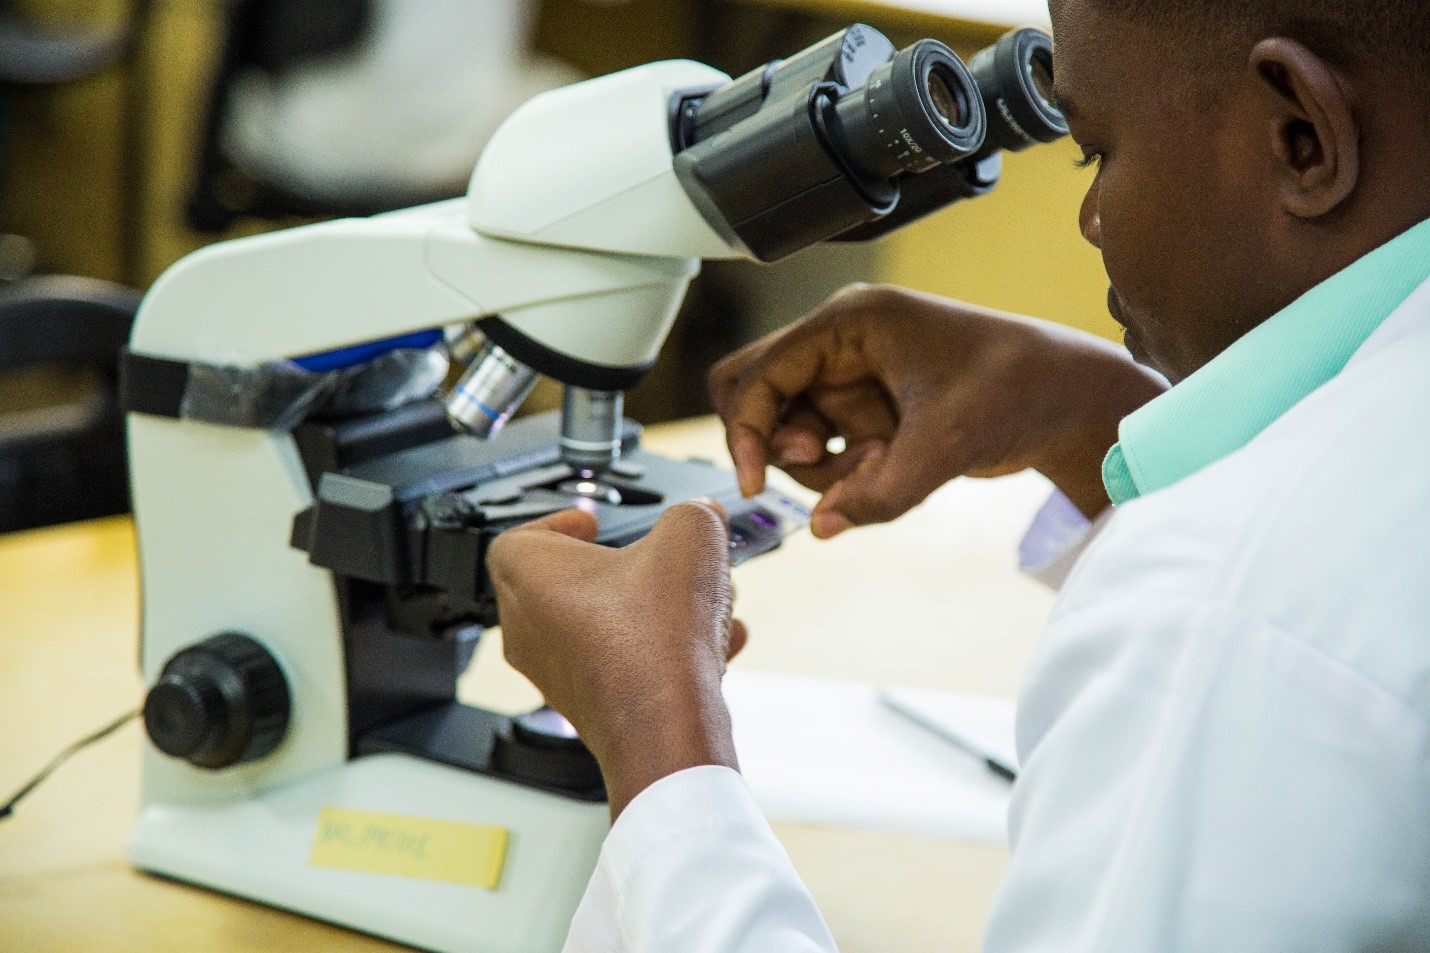 TRAINING: Shinda Malaria hosts microscopy training for lab technicians